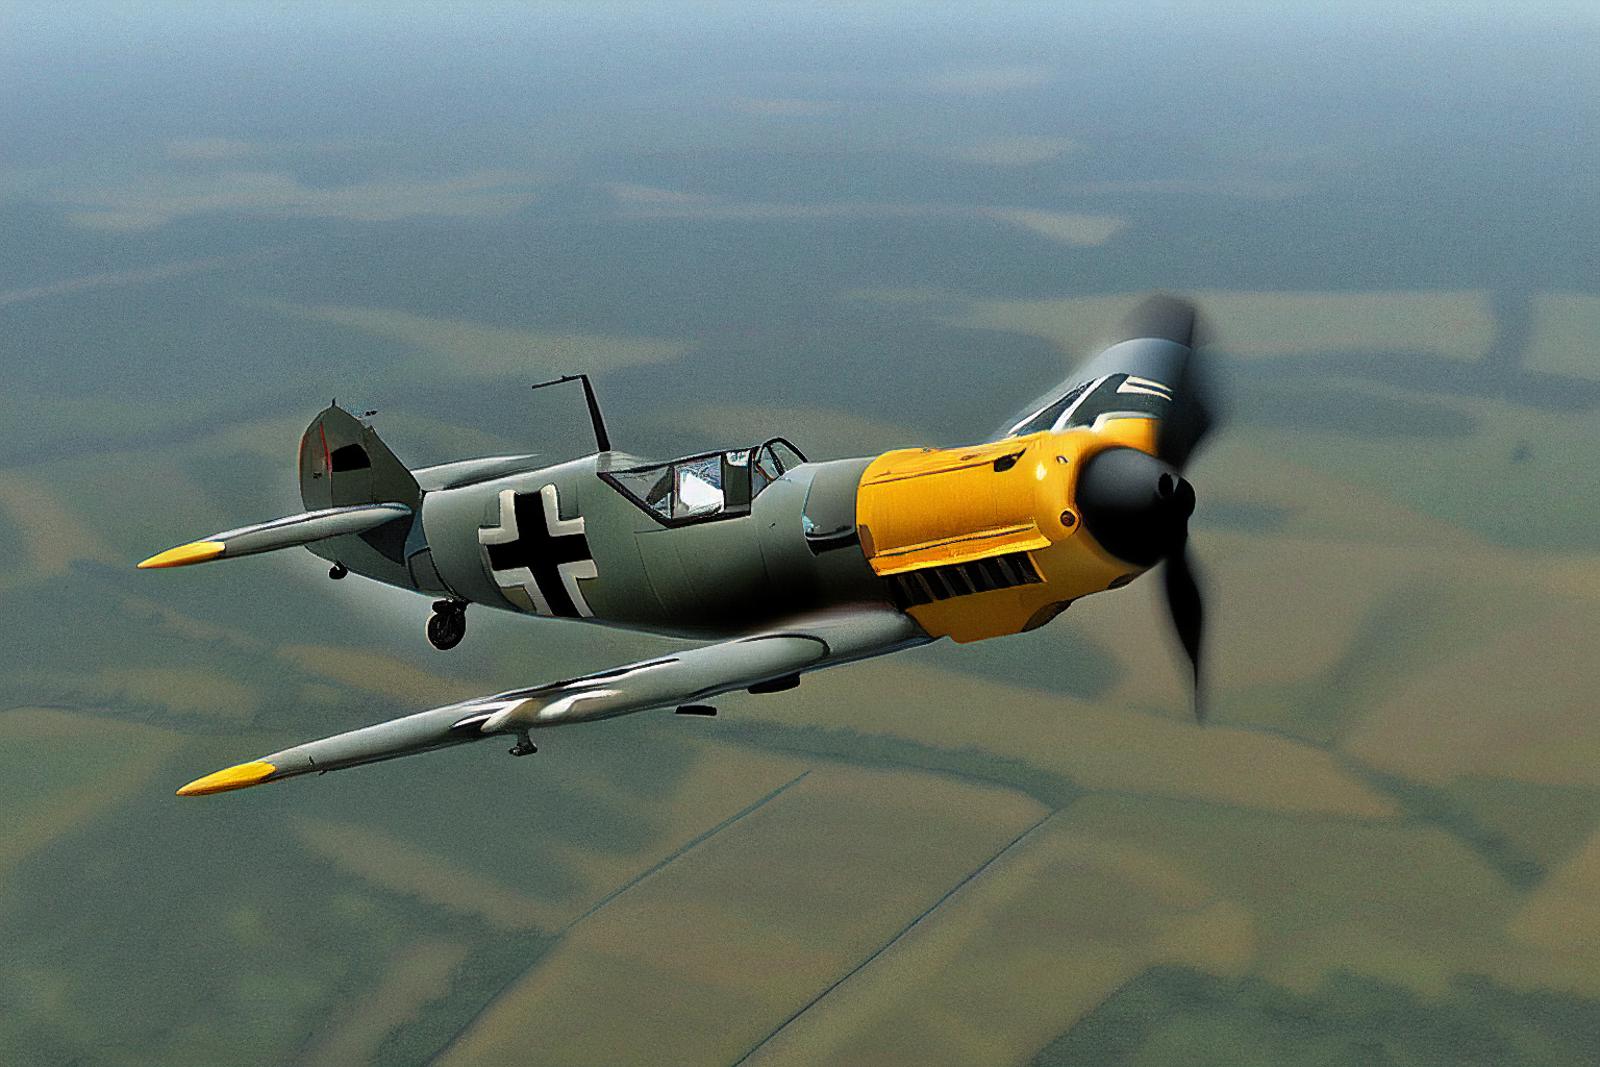 Messerschmitt Bf 109 Fighter image by MajMorse